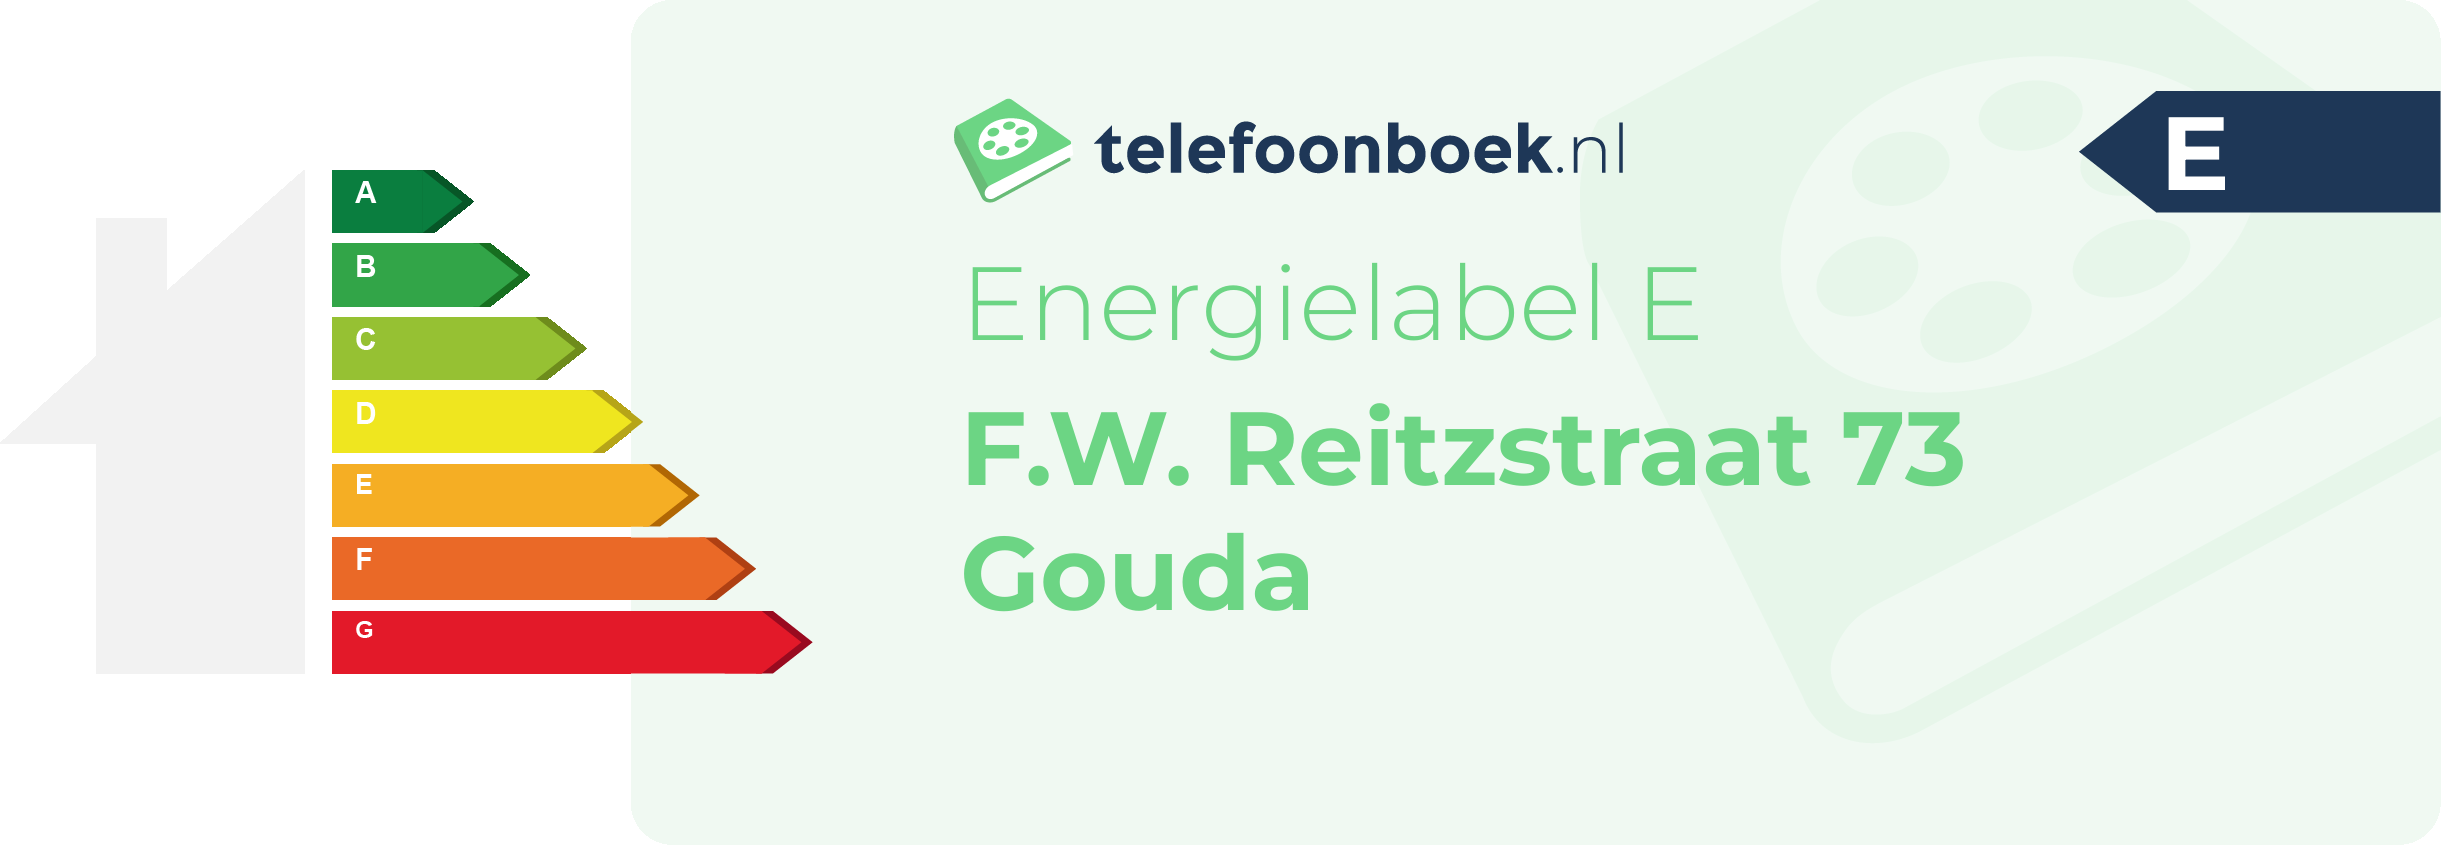 Energielabel F.W. Reitzstraat 73 Gouda